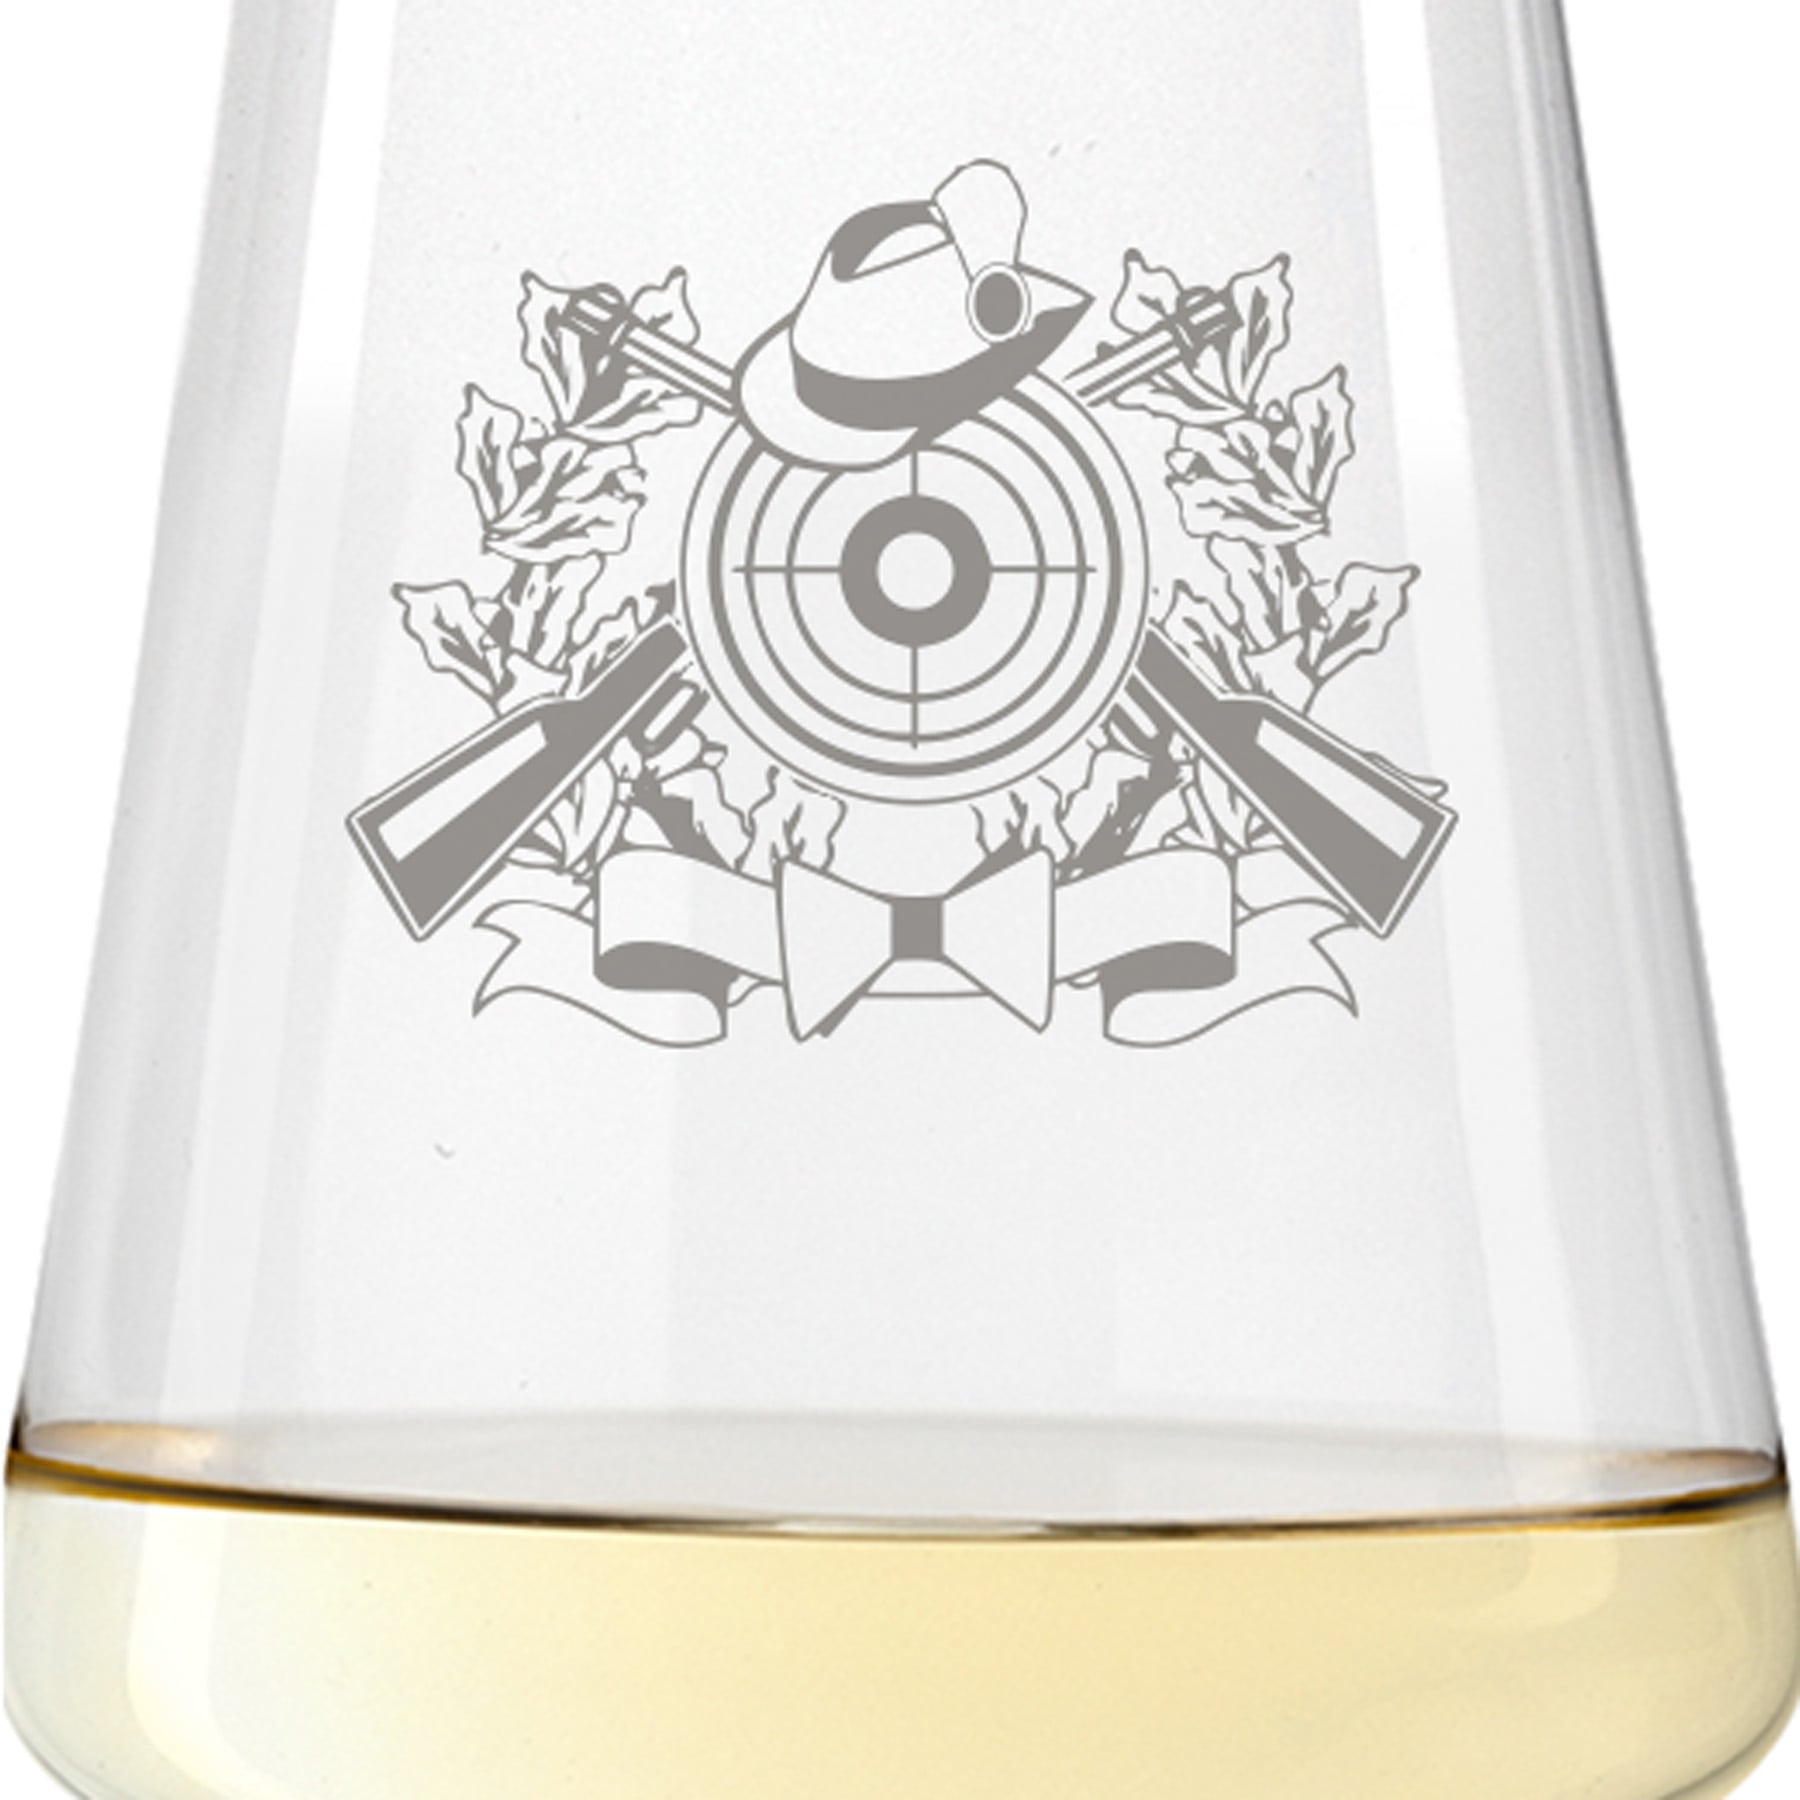 Leonardo Weißweinglas PUCCINI 560ml mit Namen oder Wunschtext graviert (Schützenlogo)